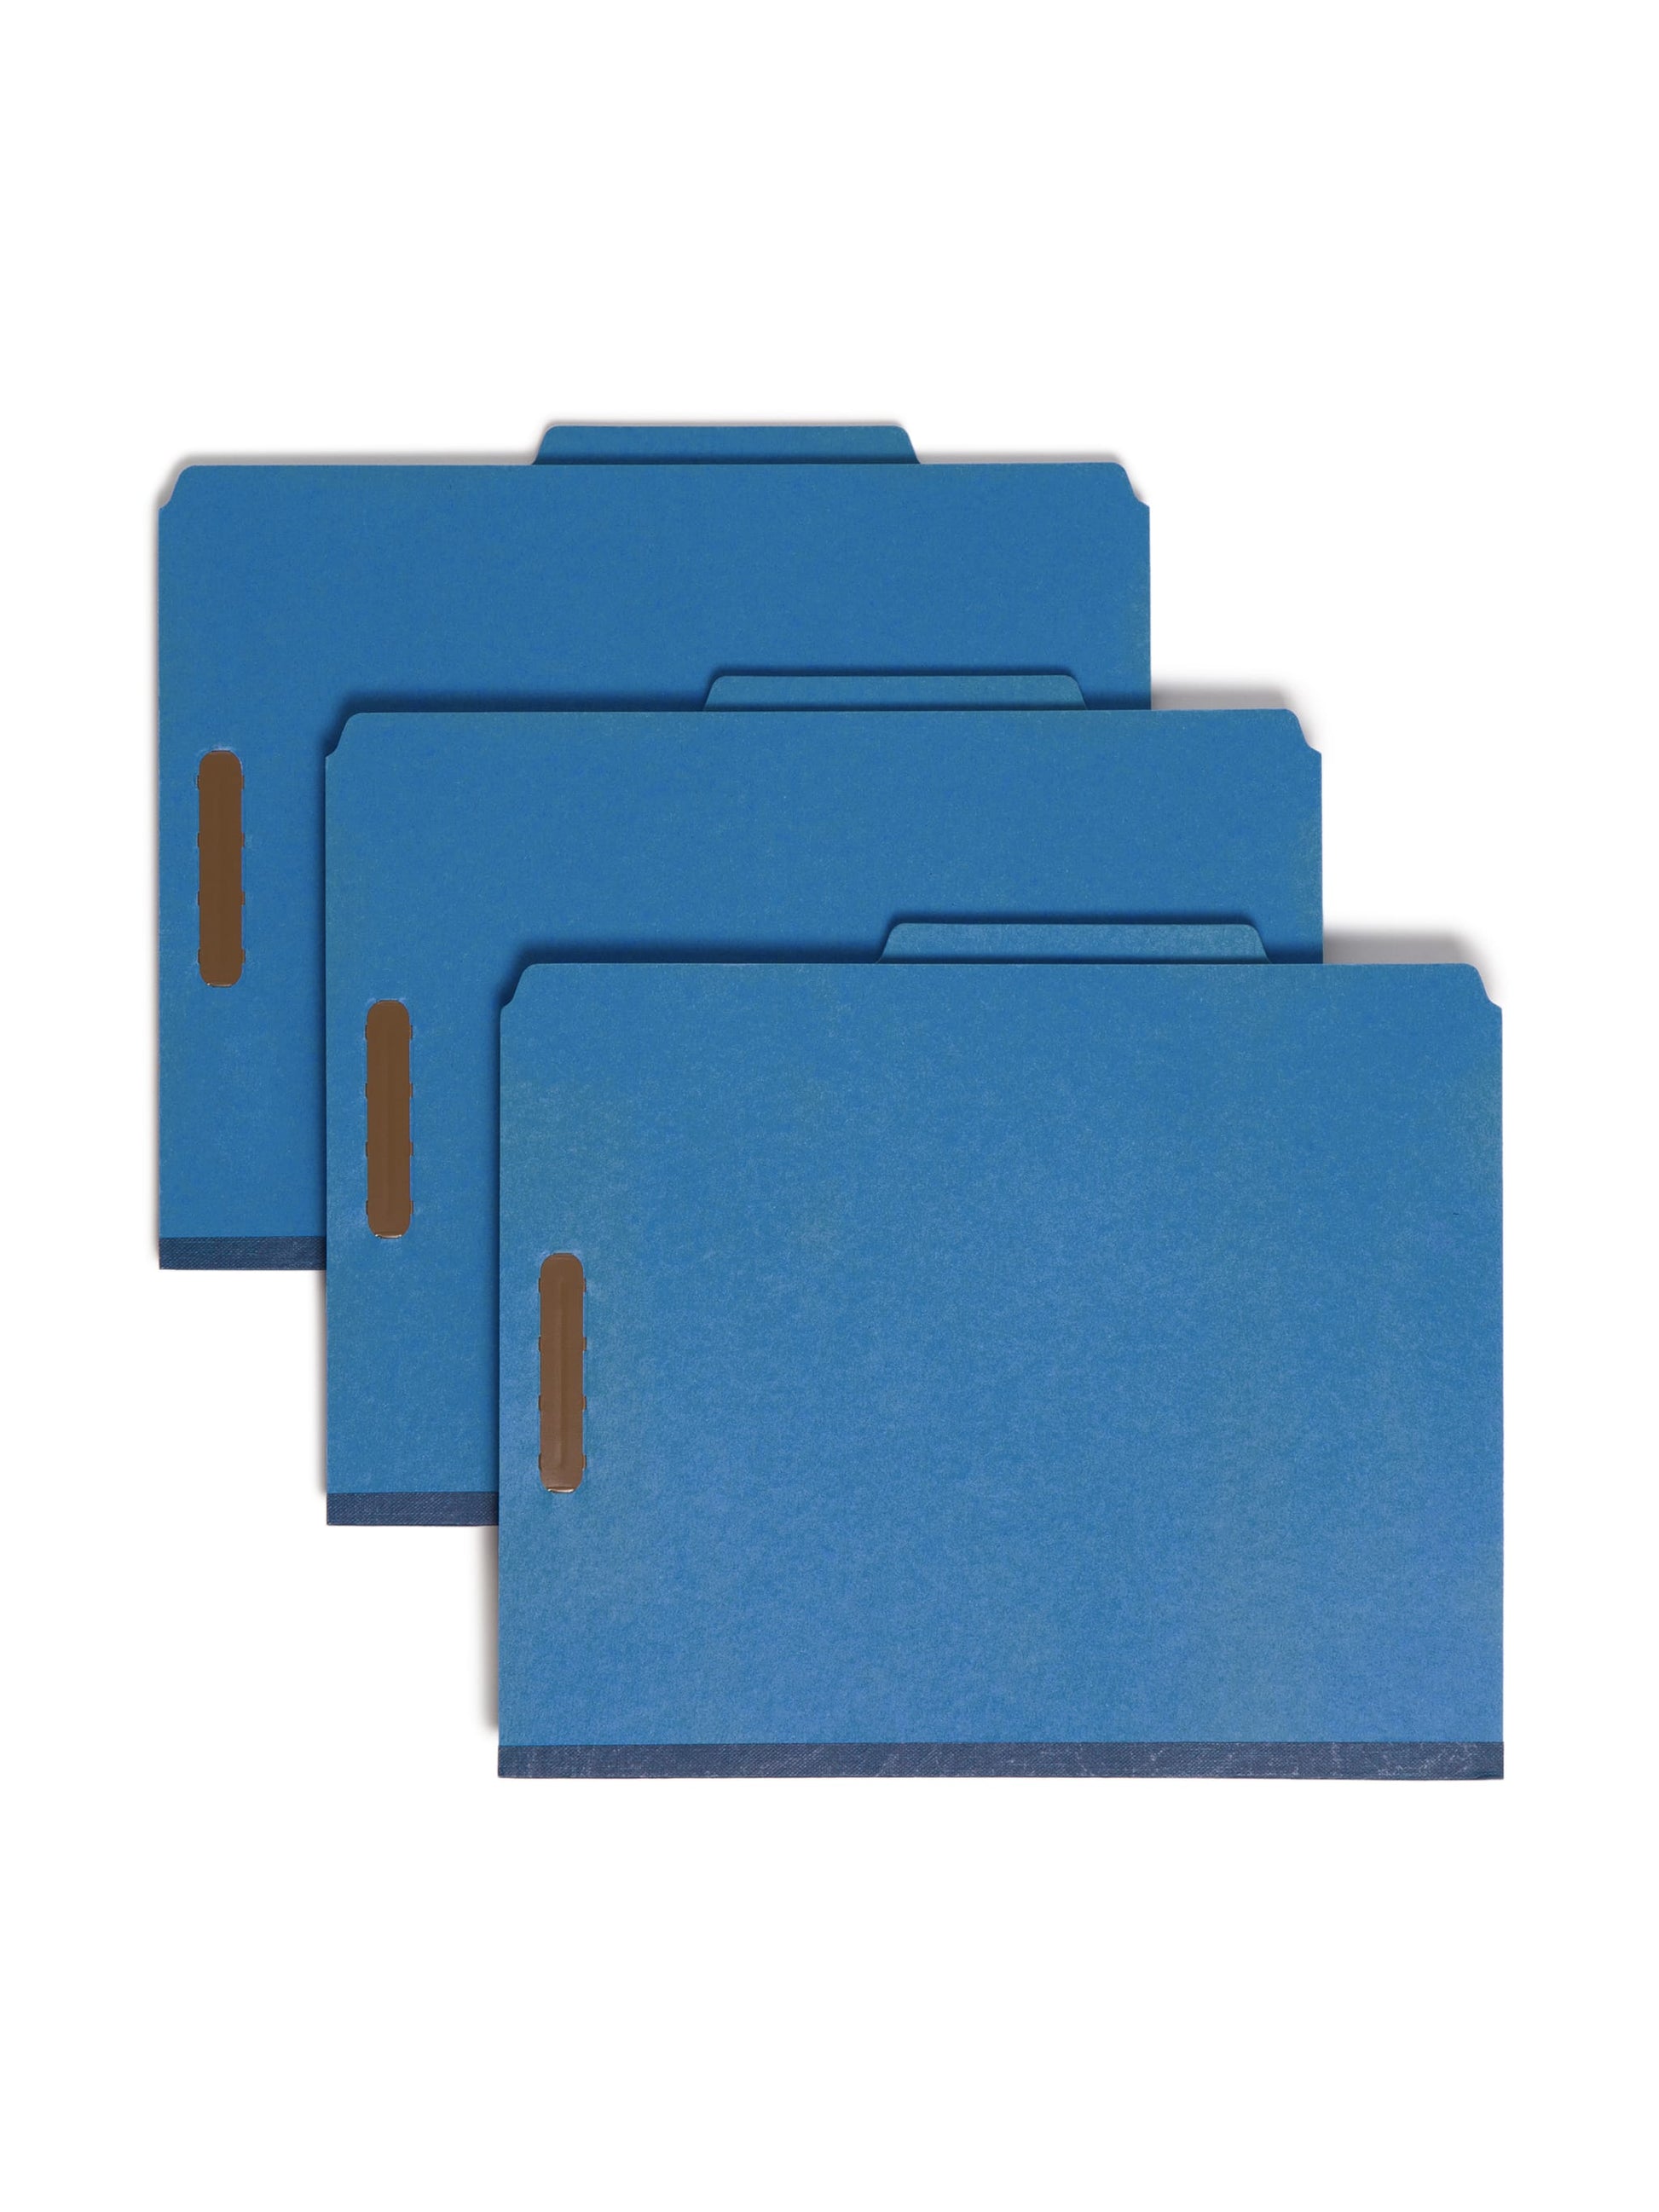 Pressboard Classification File Folders, 2 Dividers, 2 inch Expansion, Dark Blue Color, Letter Size, Set of 0, 30086486140622